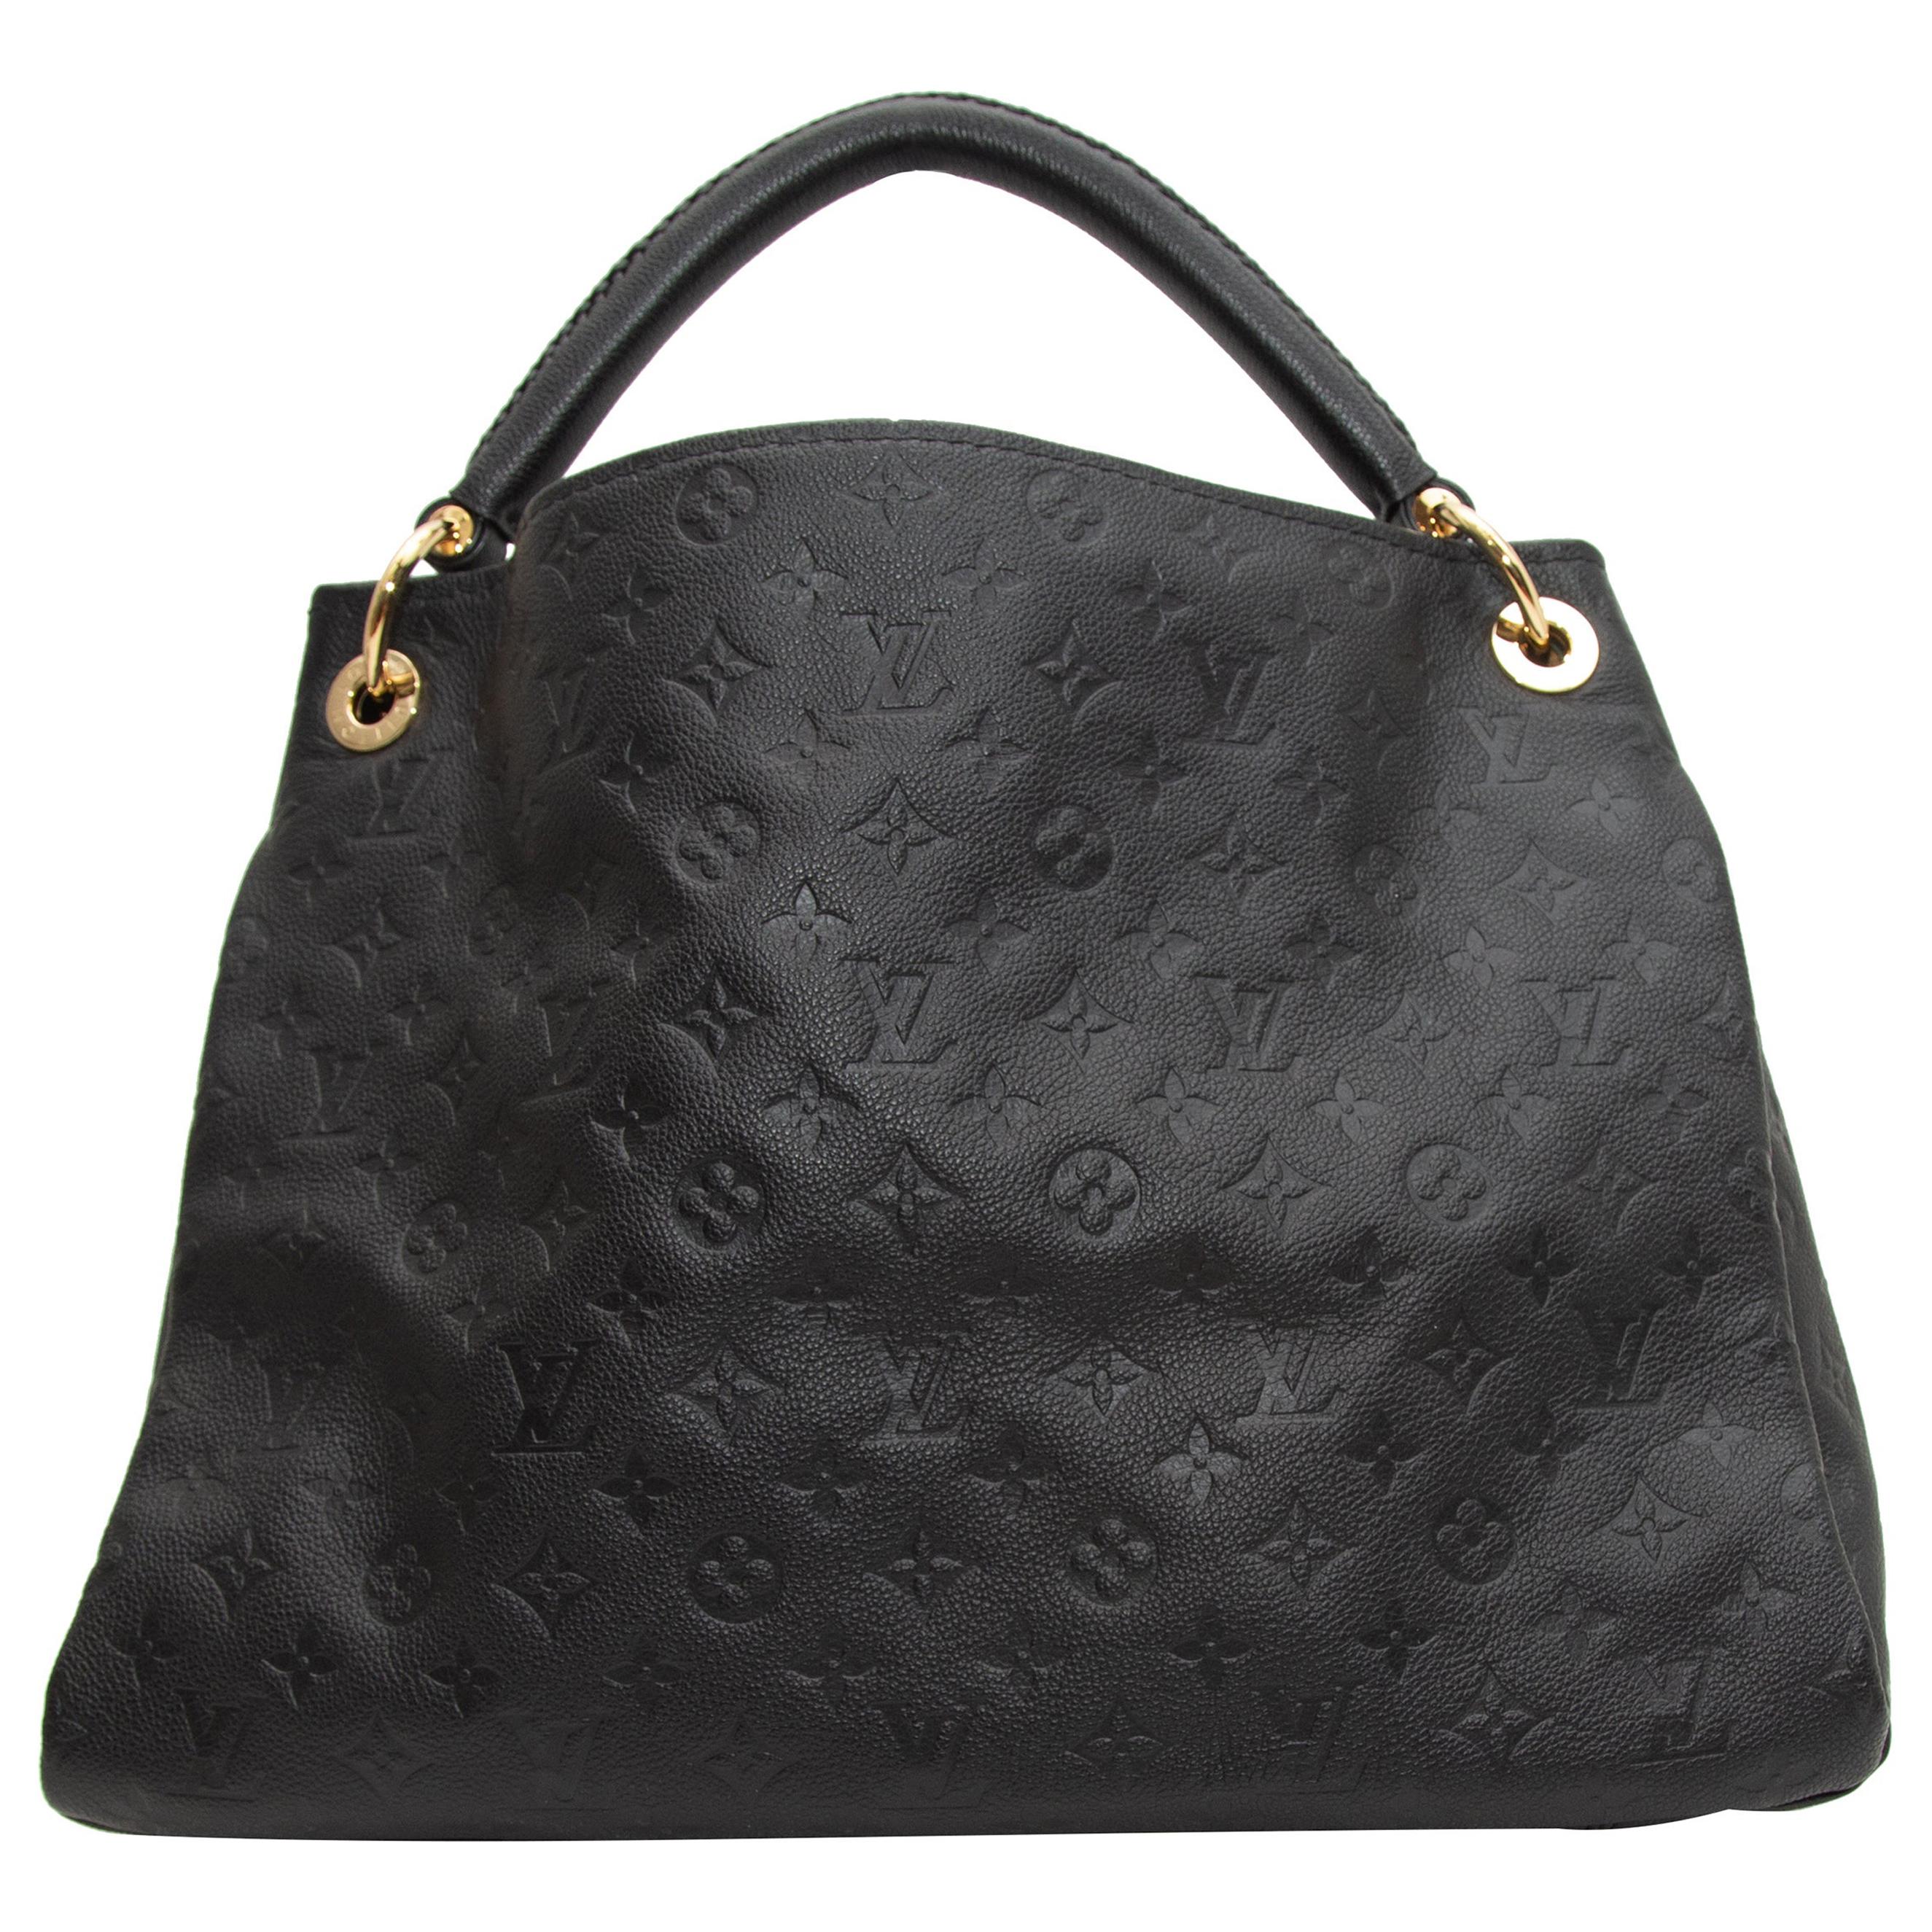  Louis Vuitton Black Monogram Empreinte Leather Artsy MM Bag